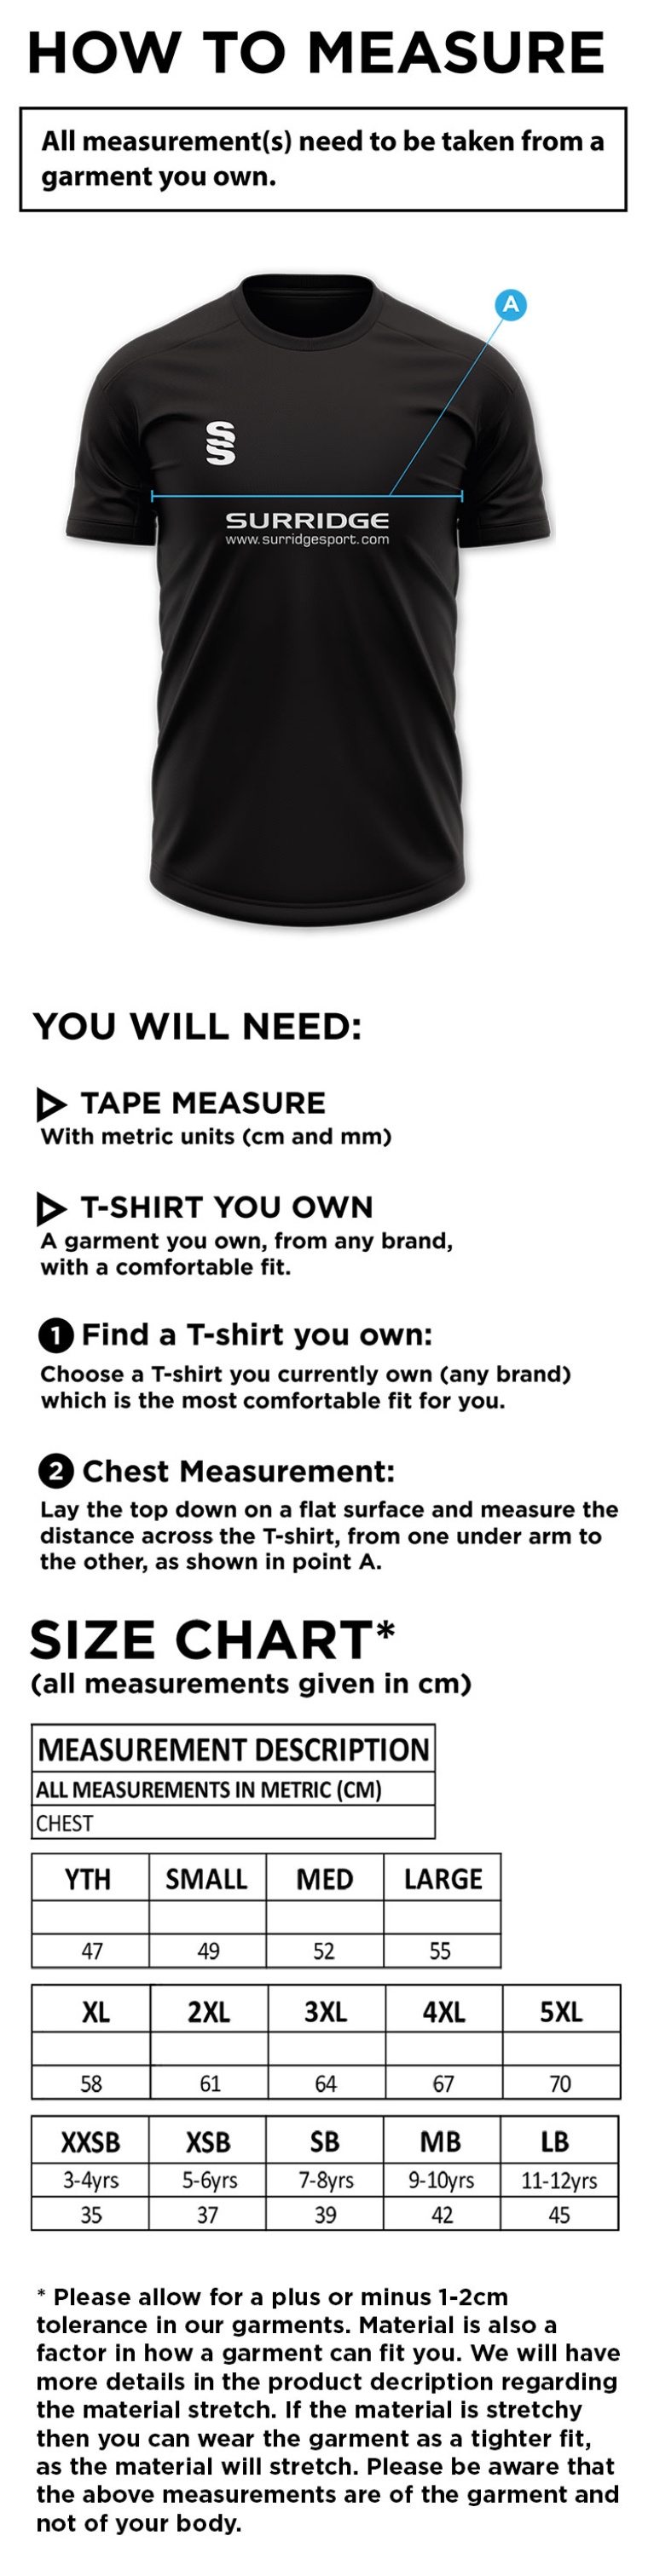 Regents University Polo Shirt - Size Guide